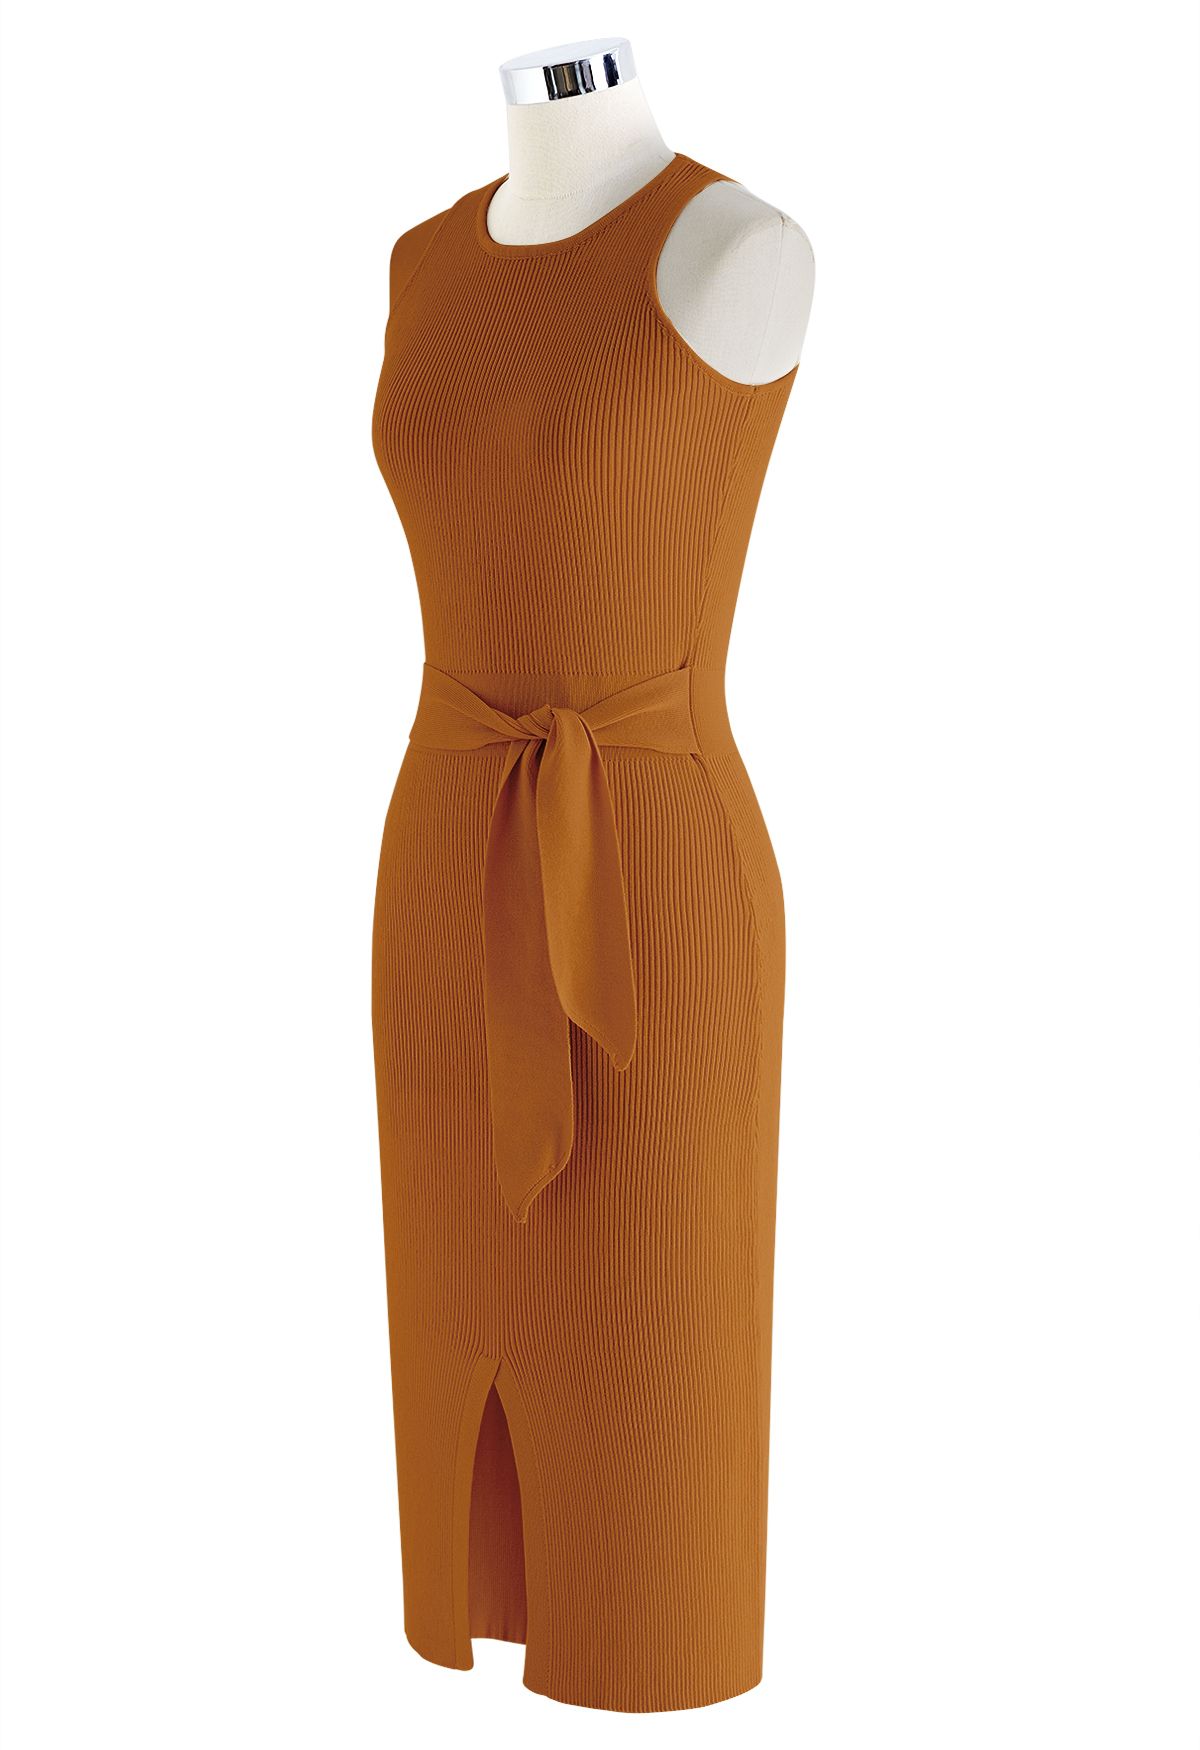 Front Slit Tie Waist Sleeveless Knit Dress in Tan